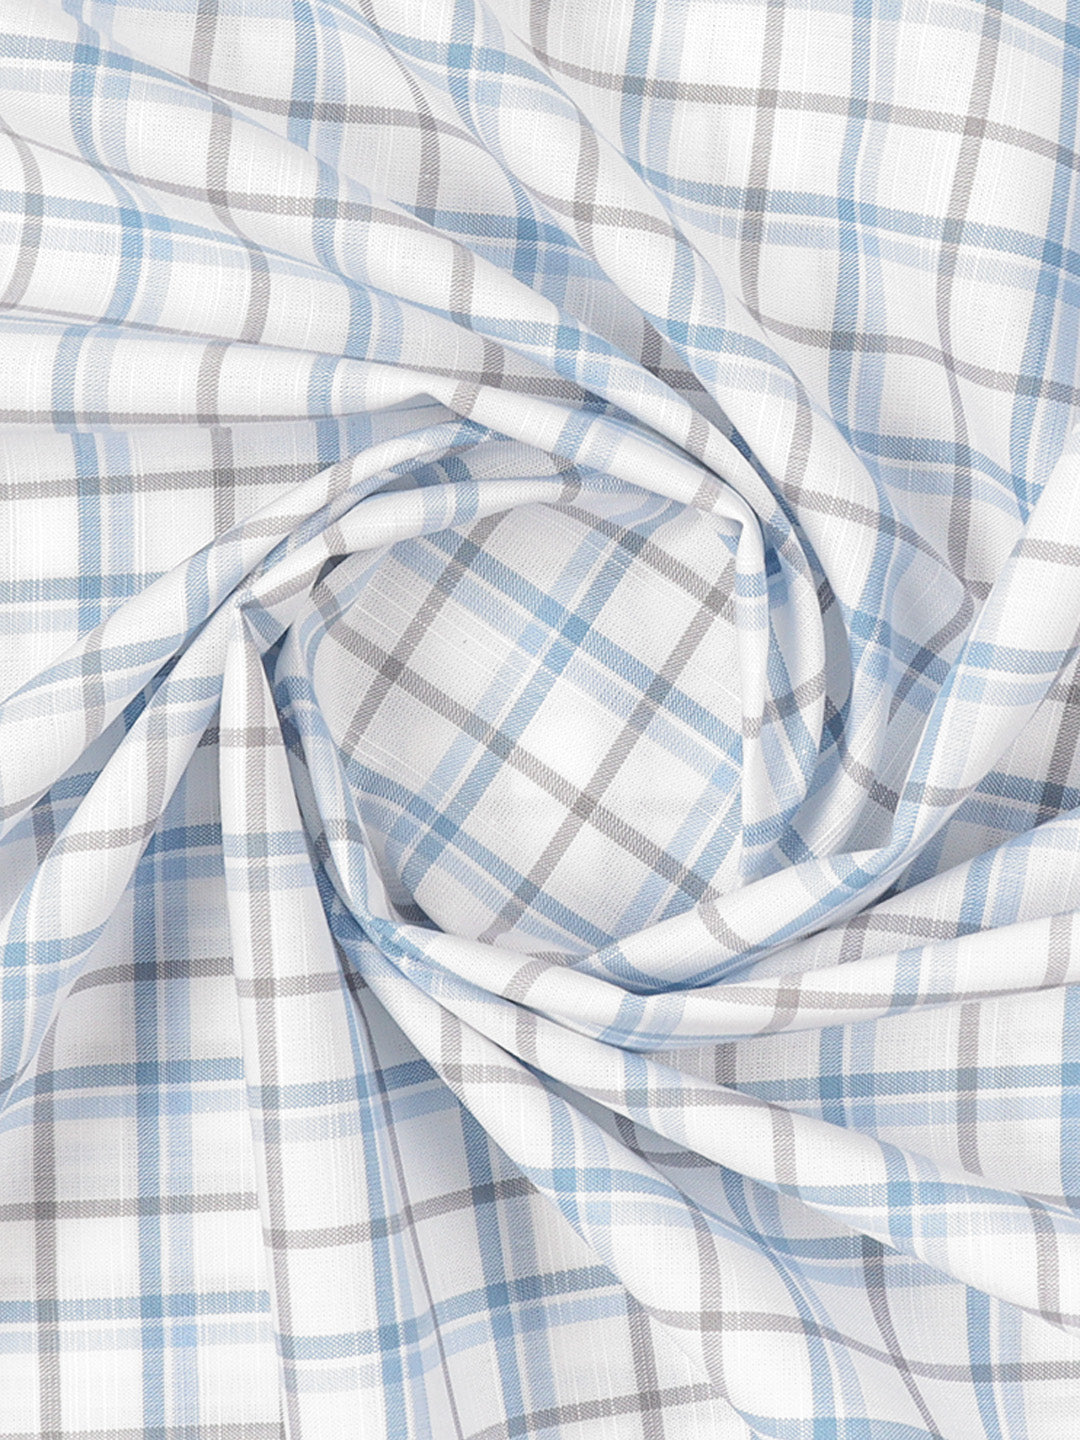 Cotton White & Blue Check Shirt Fabric-Liberty Cotton